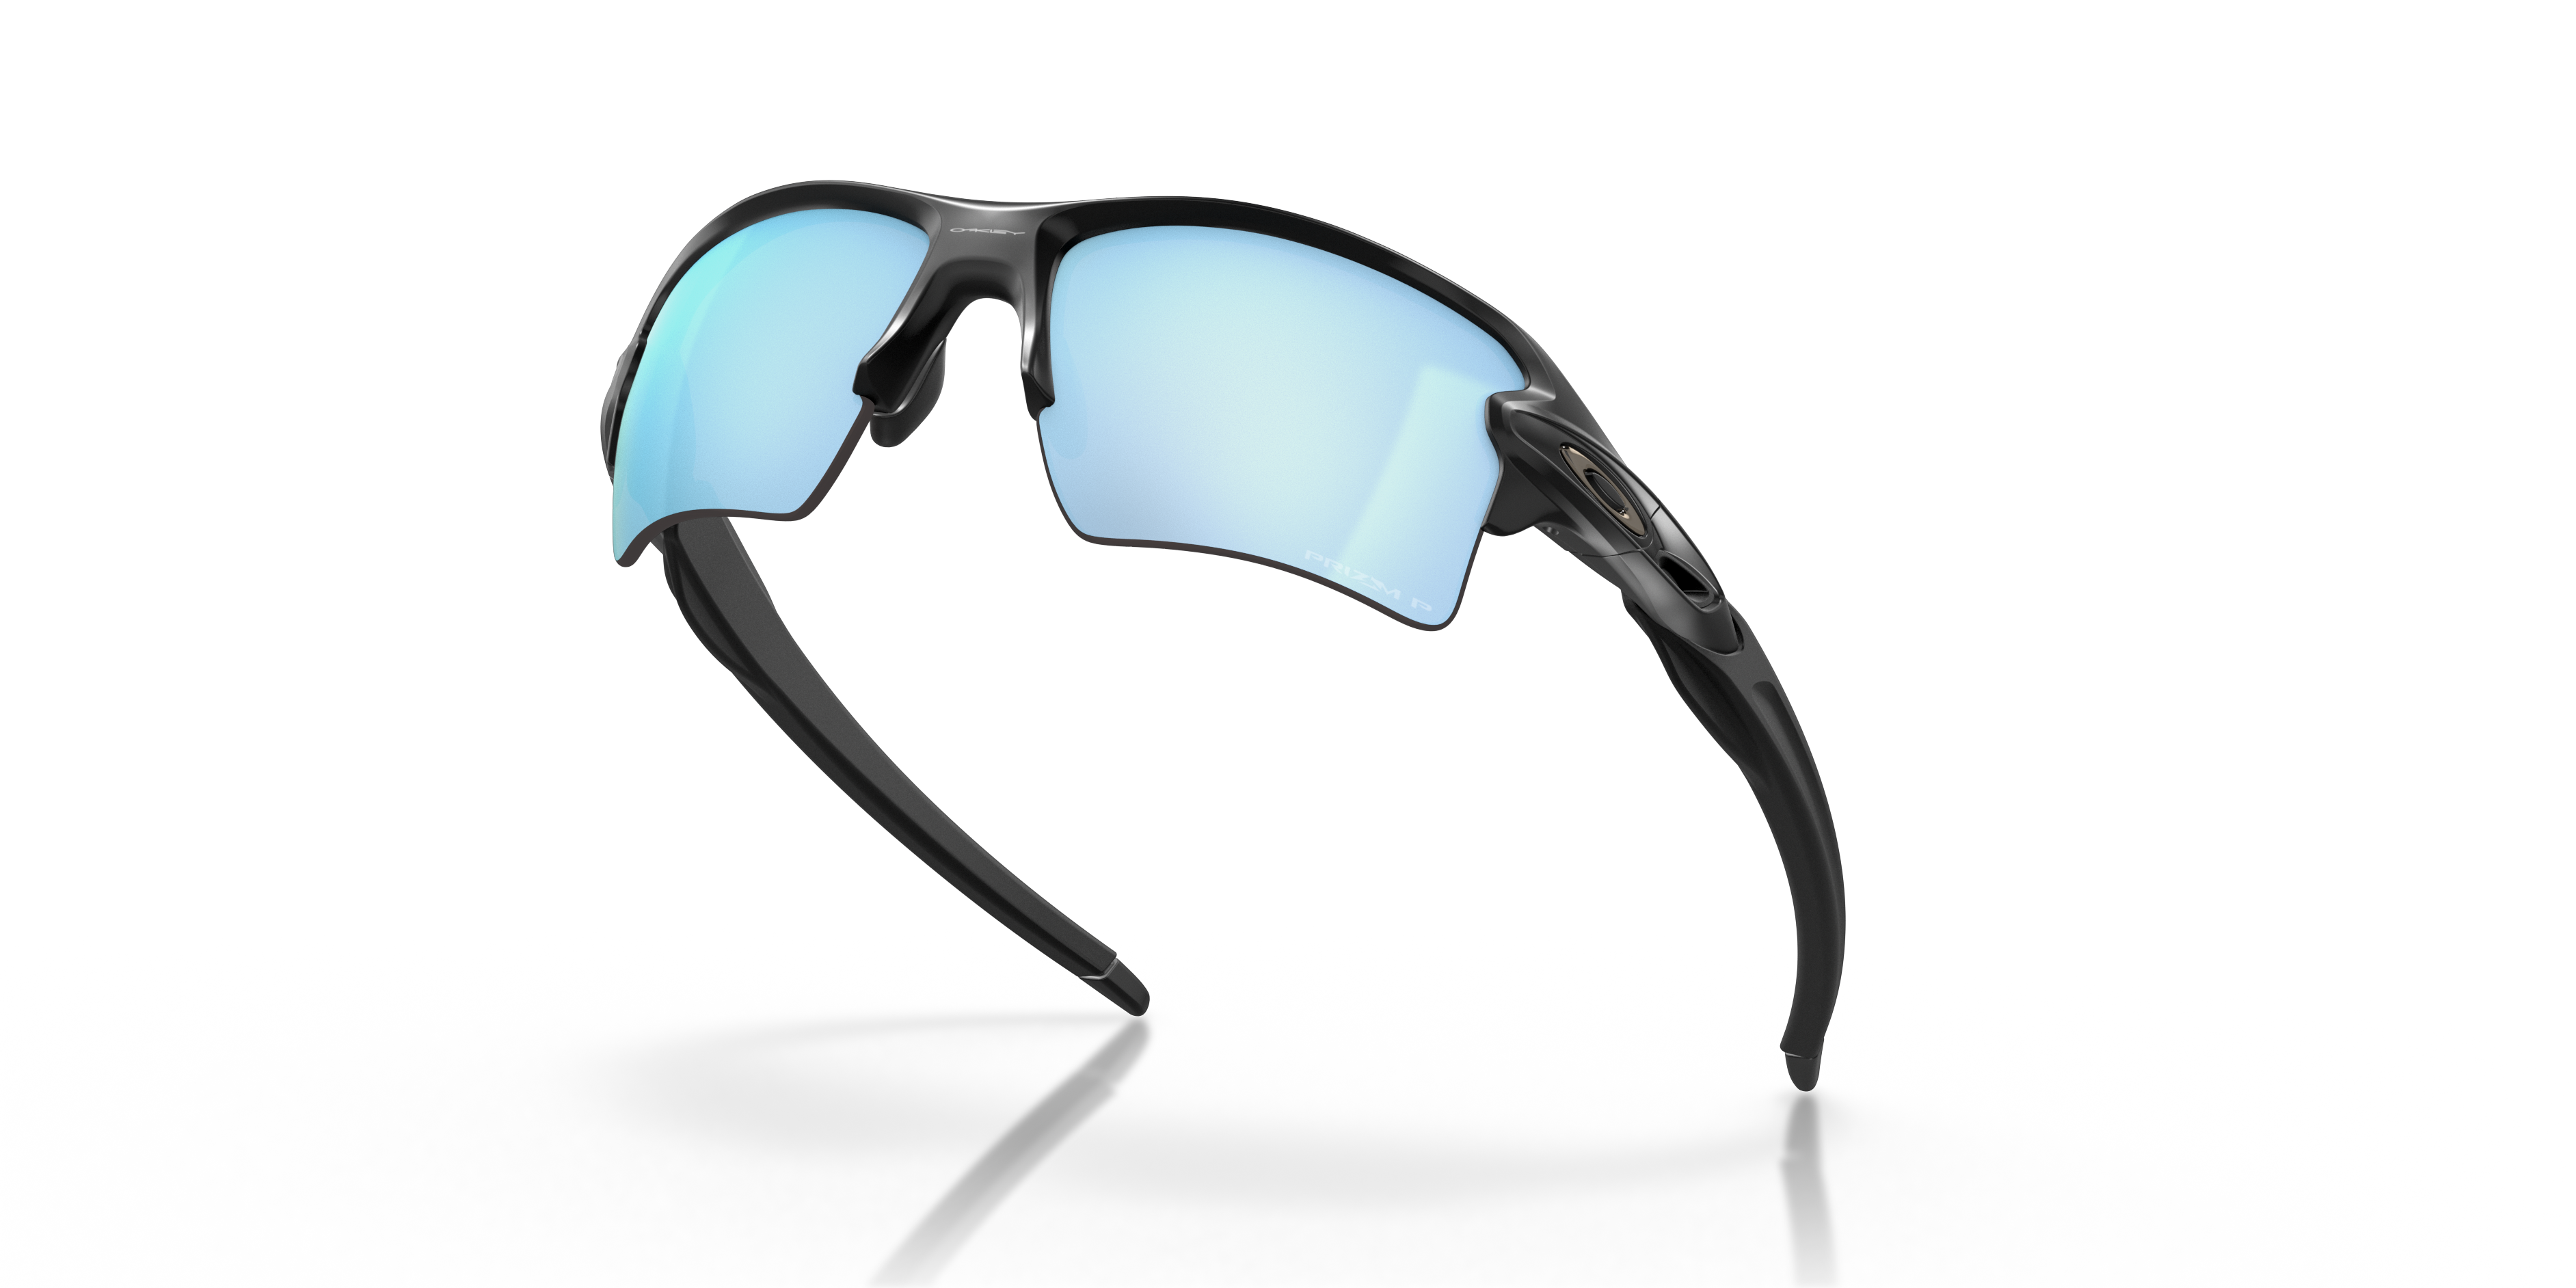 oakley flak 2.0 xl prizm deep water polarized sunglasses